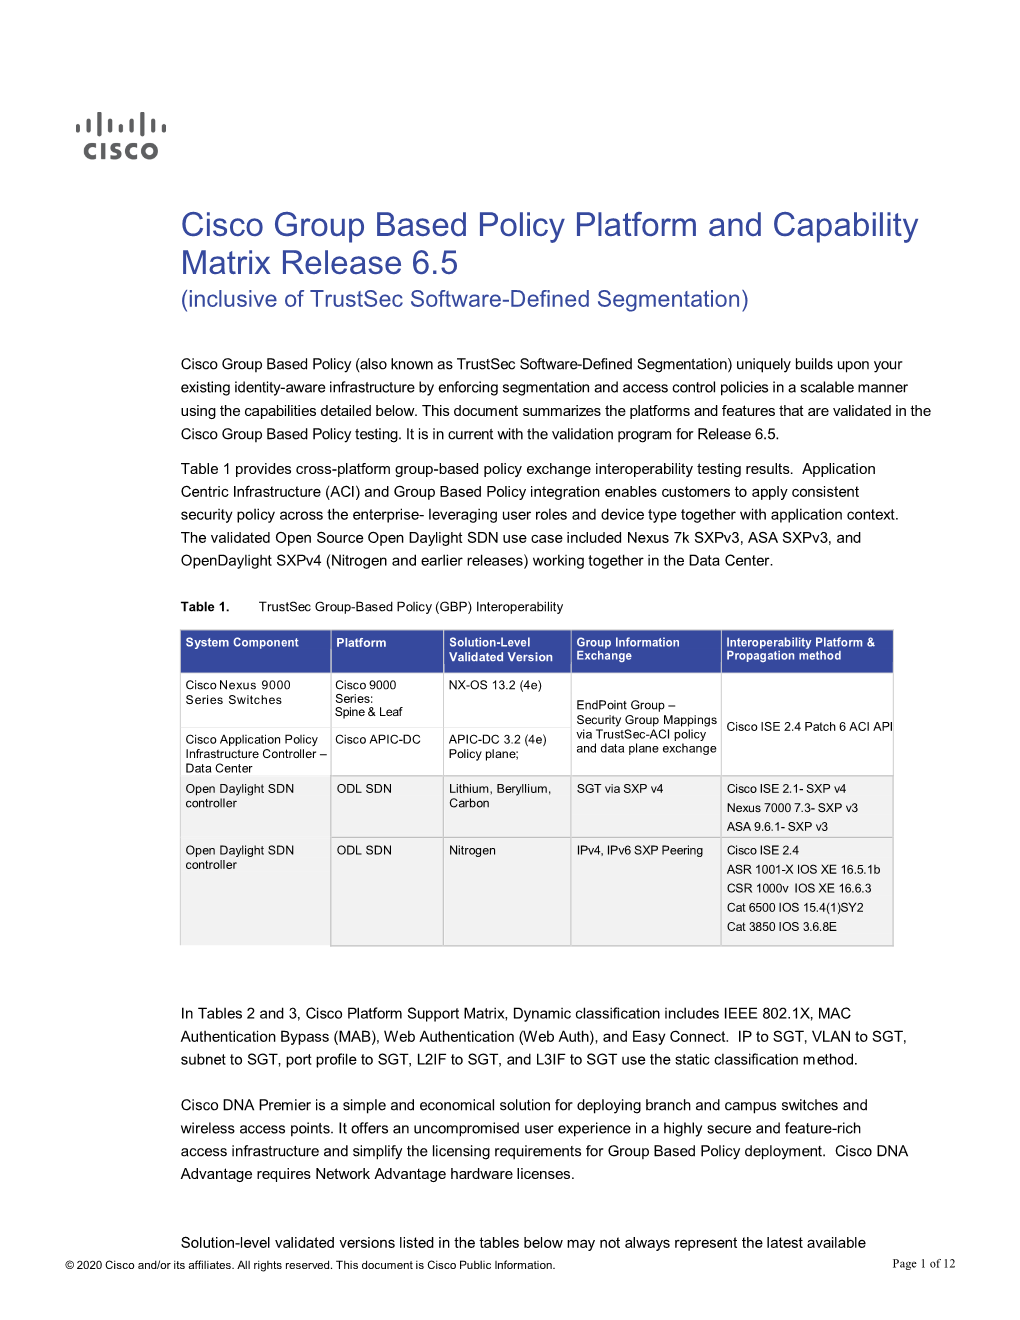 Cisco Group Based Policy – Trustsec 6.5 Platform Capability Matrix